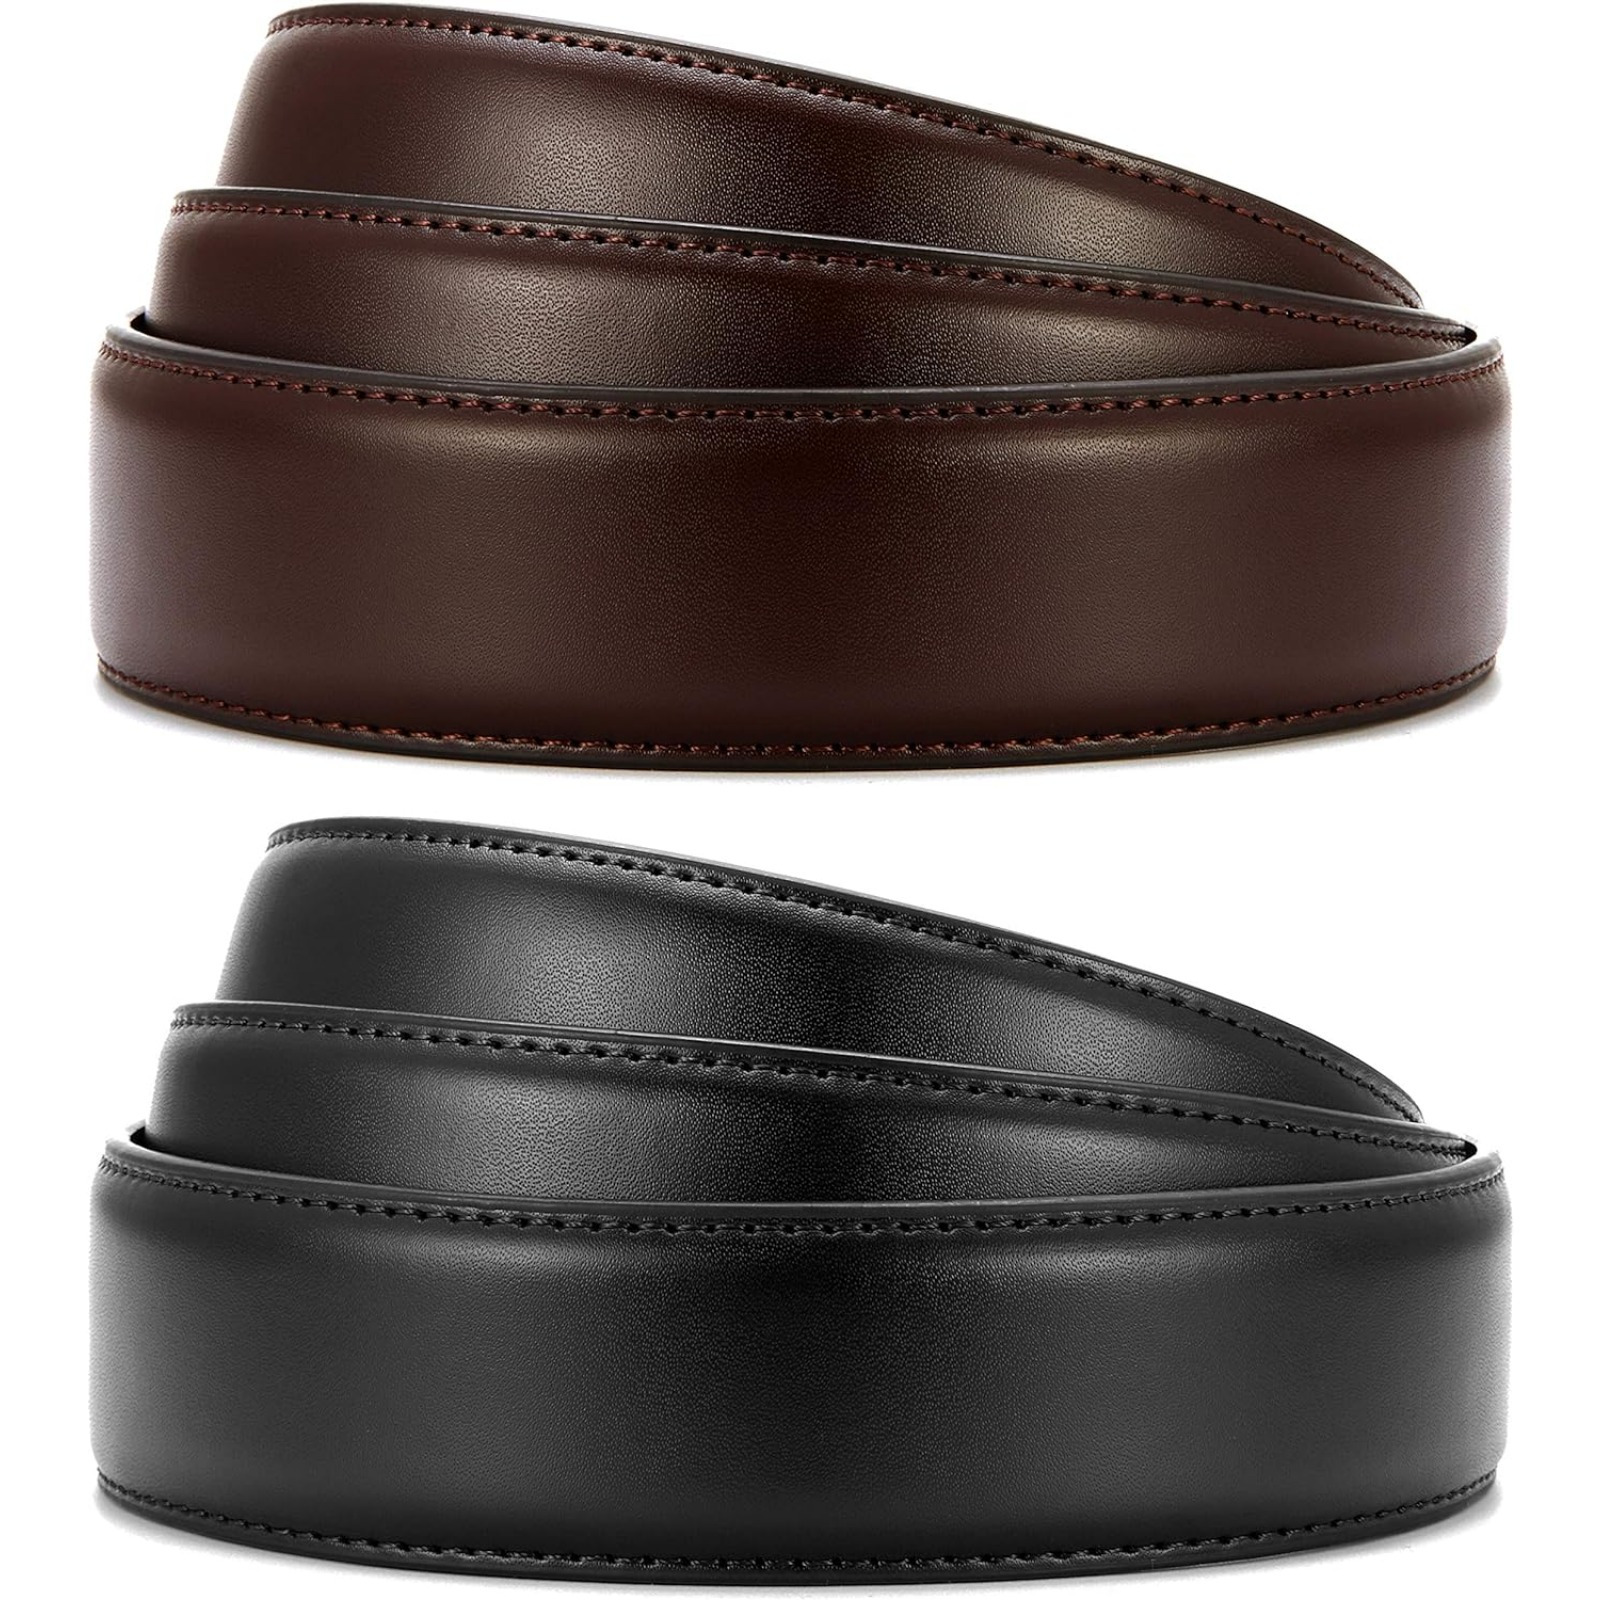 

Chaoren Ratchet Belt Replacement Strap, Leather Belt Strap For 40mm Slide Click Buckle